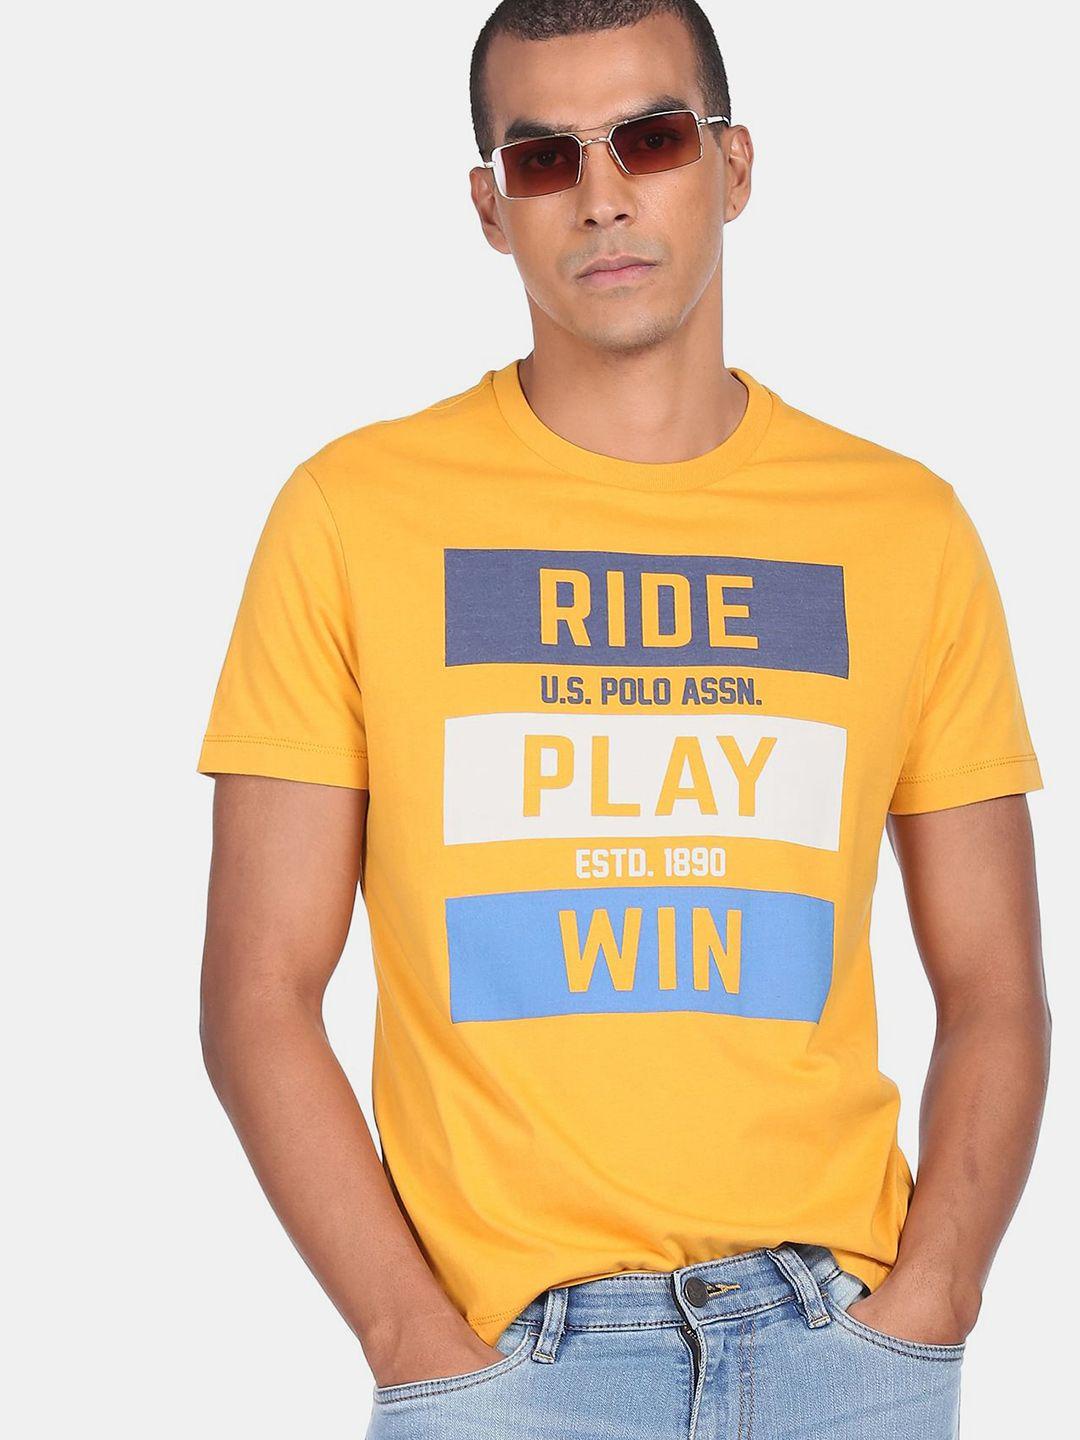 u.s.-polo-assn.-denim-co.men-yellow-typography-printed-t-shirt